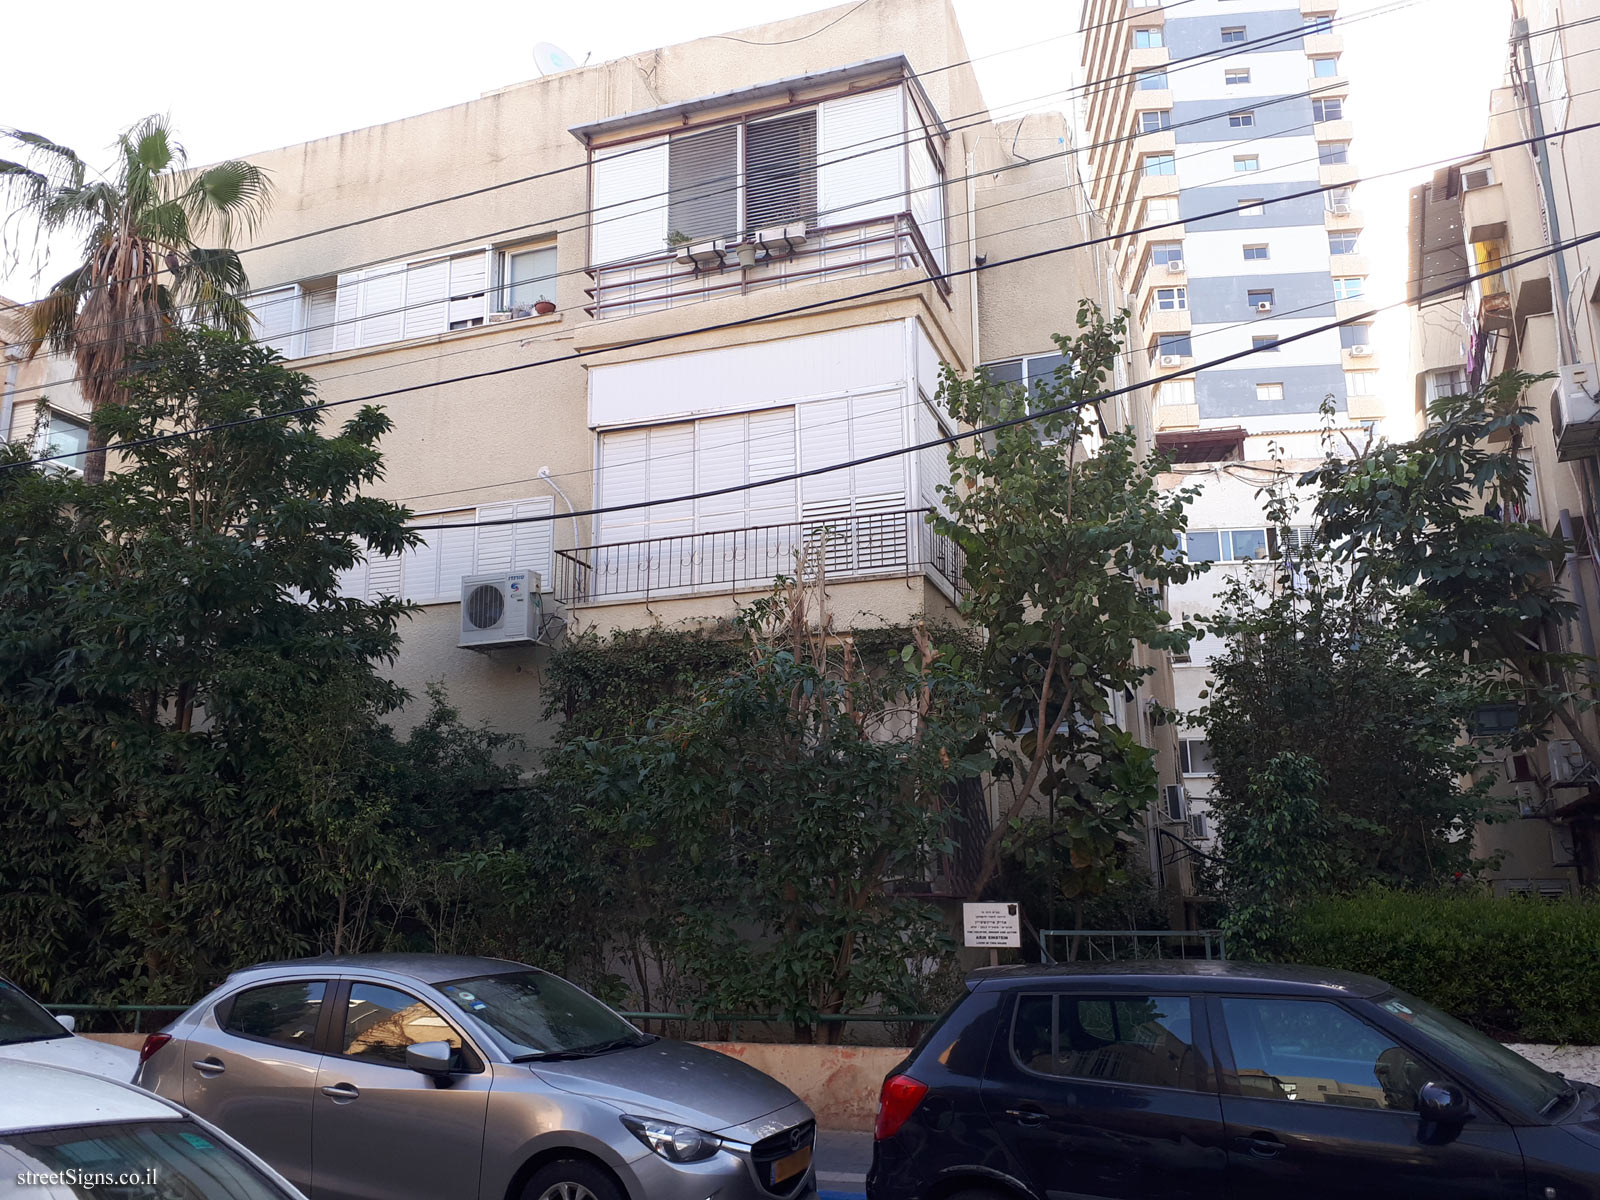 The house of Arik Einstein - Hovevei Tsiyon St 40, Tel Aviv-Yafo